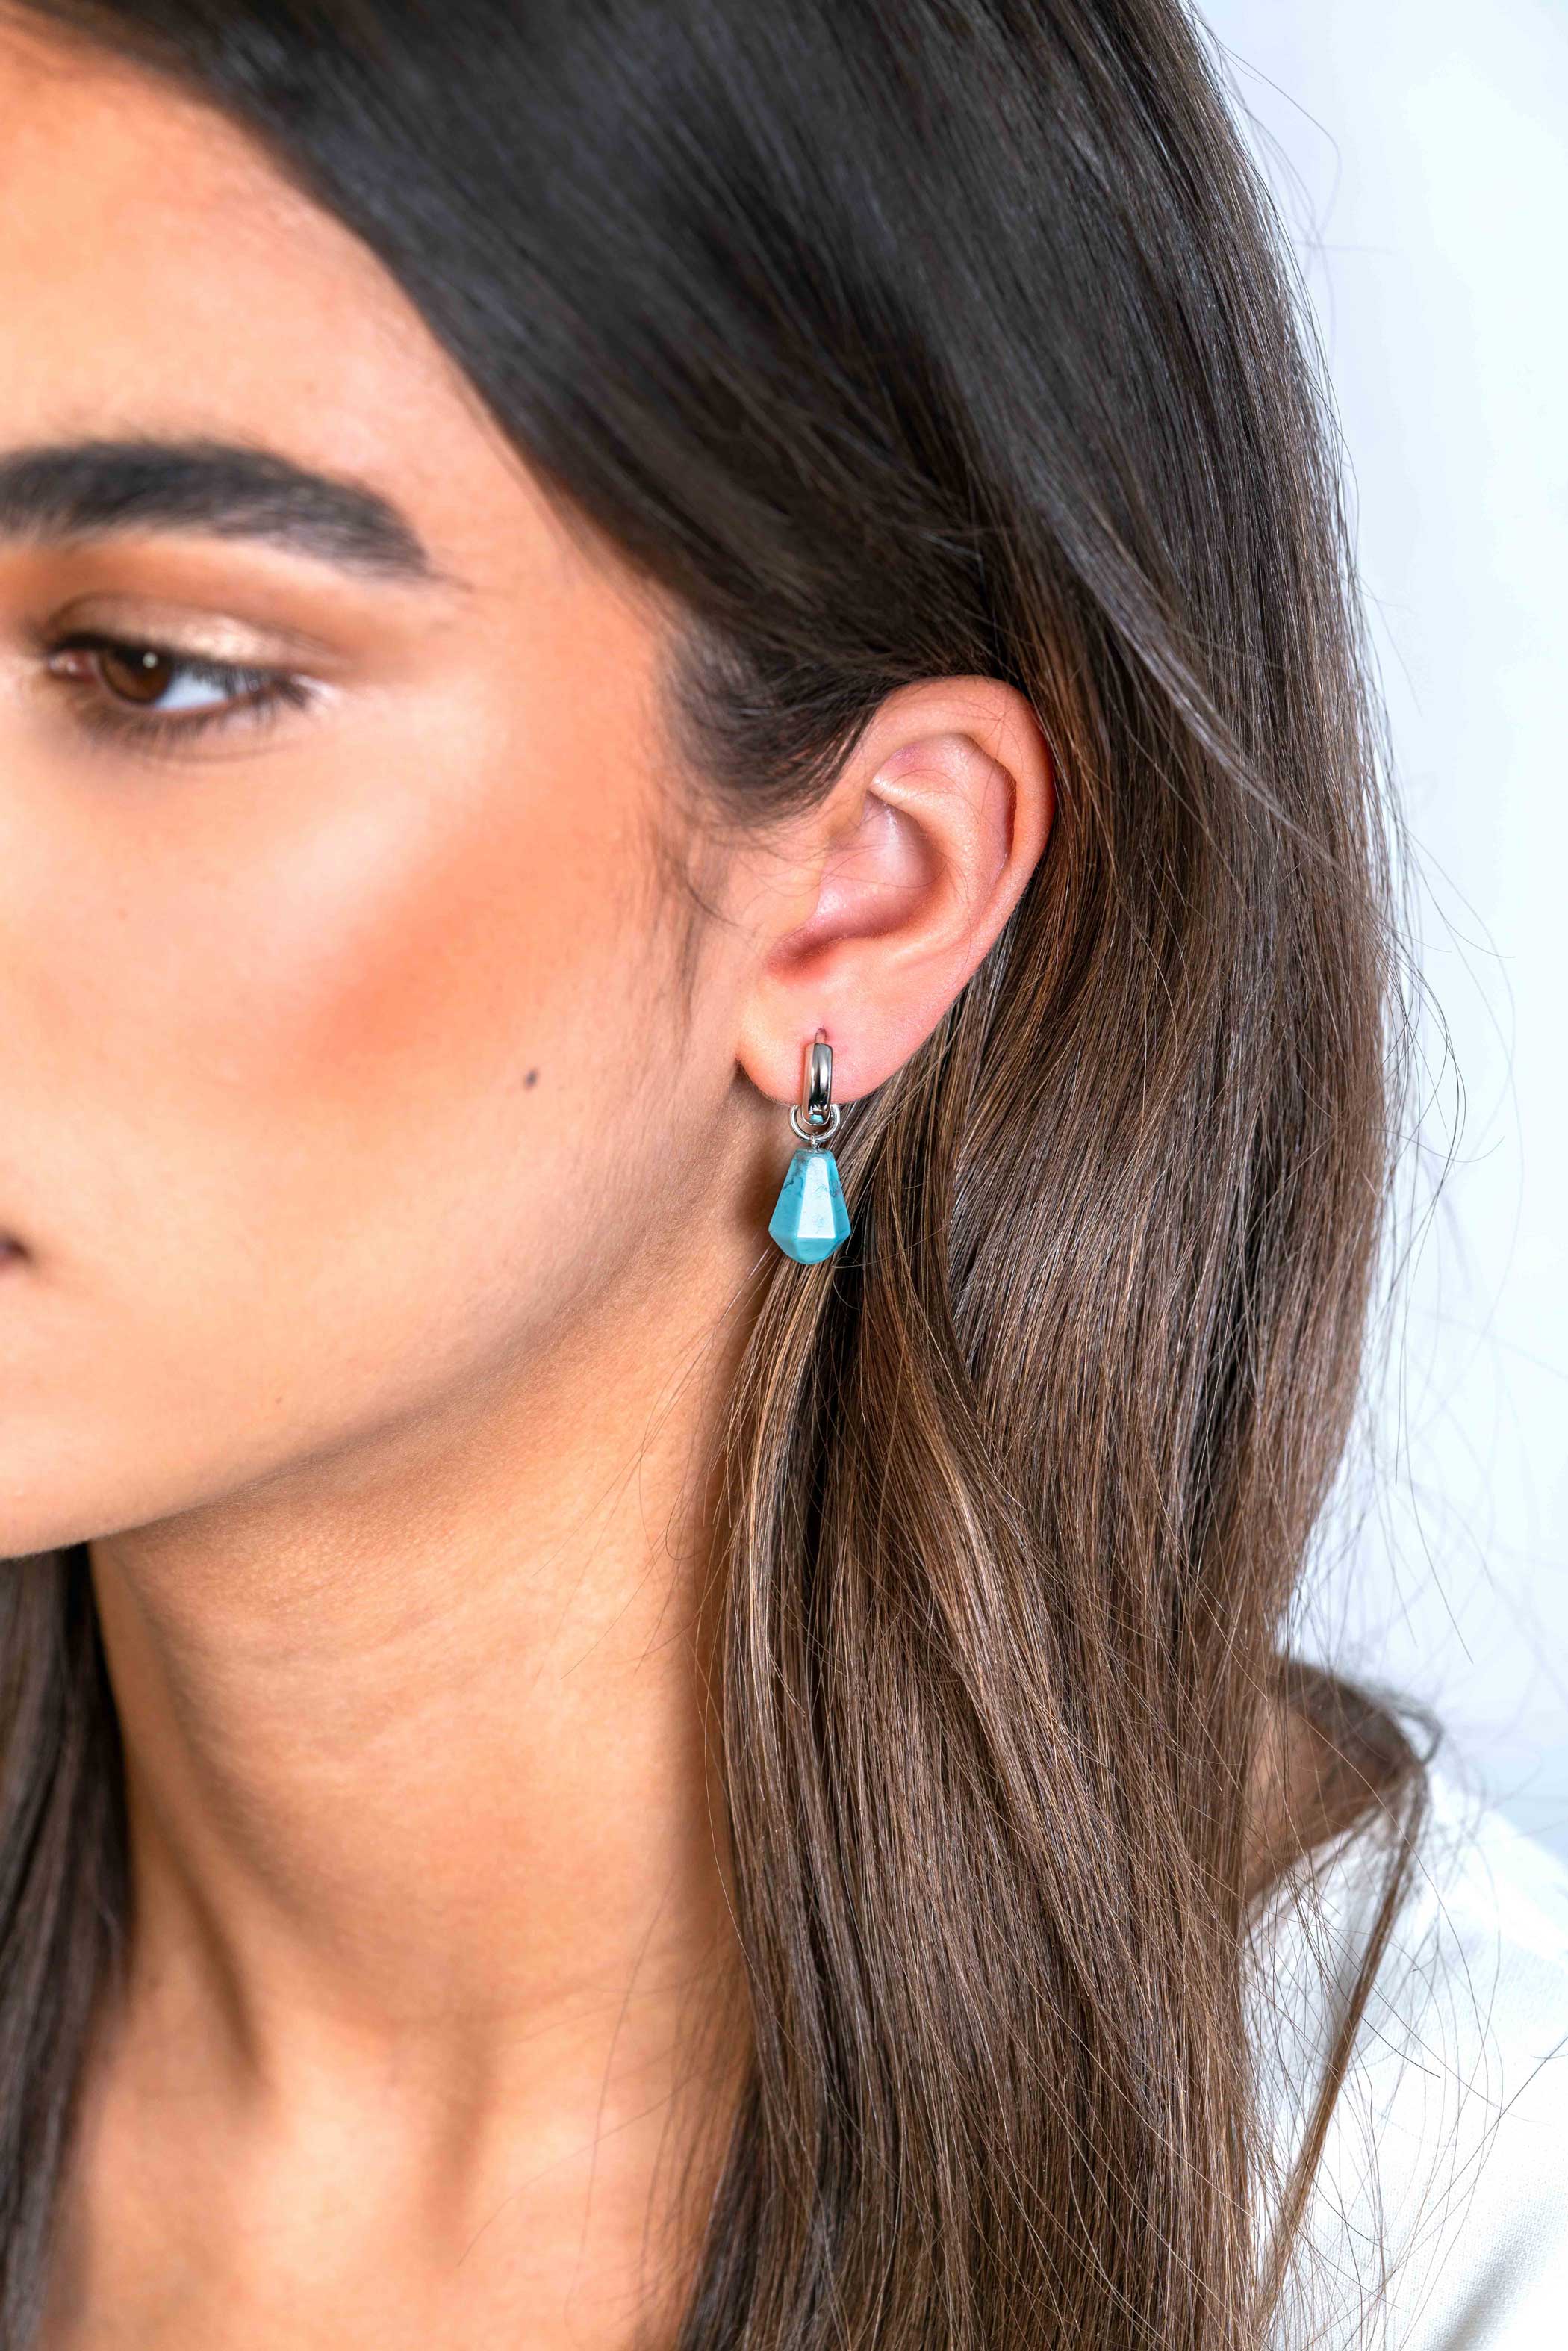 19mm ZINZI Sterling Silver Earrings Pendants Cone in Turquoise Howlite ZICH2256T (excl. hoop earrings)